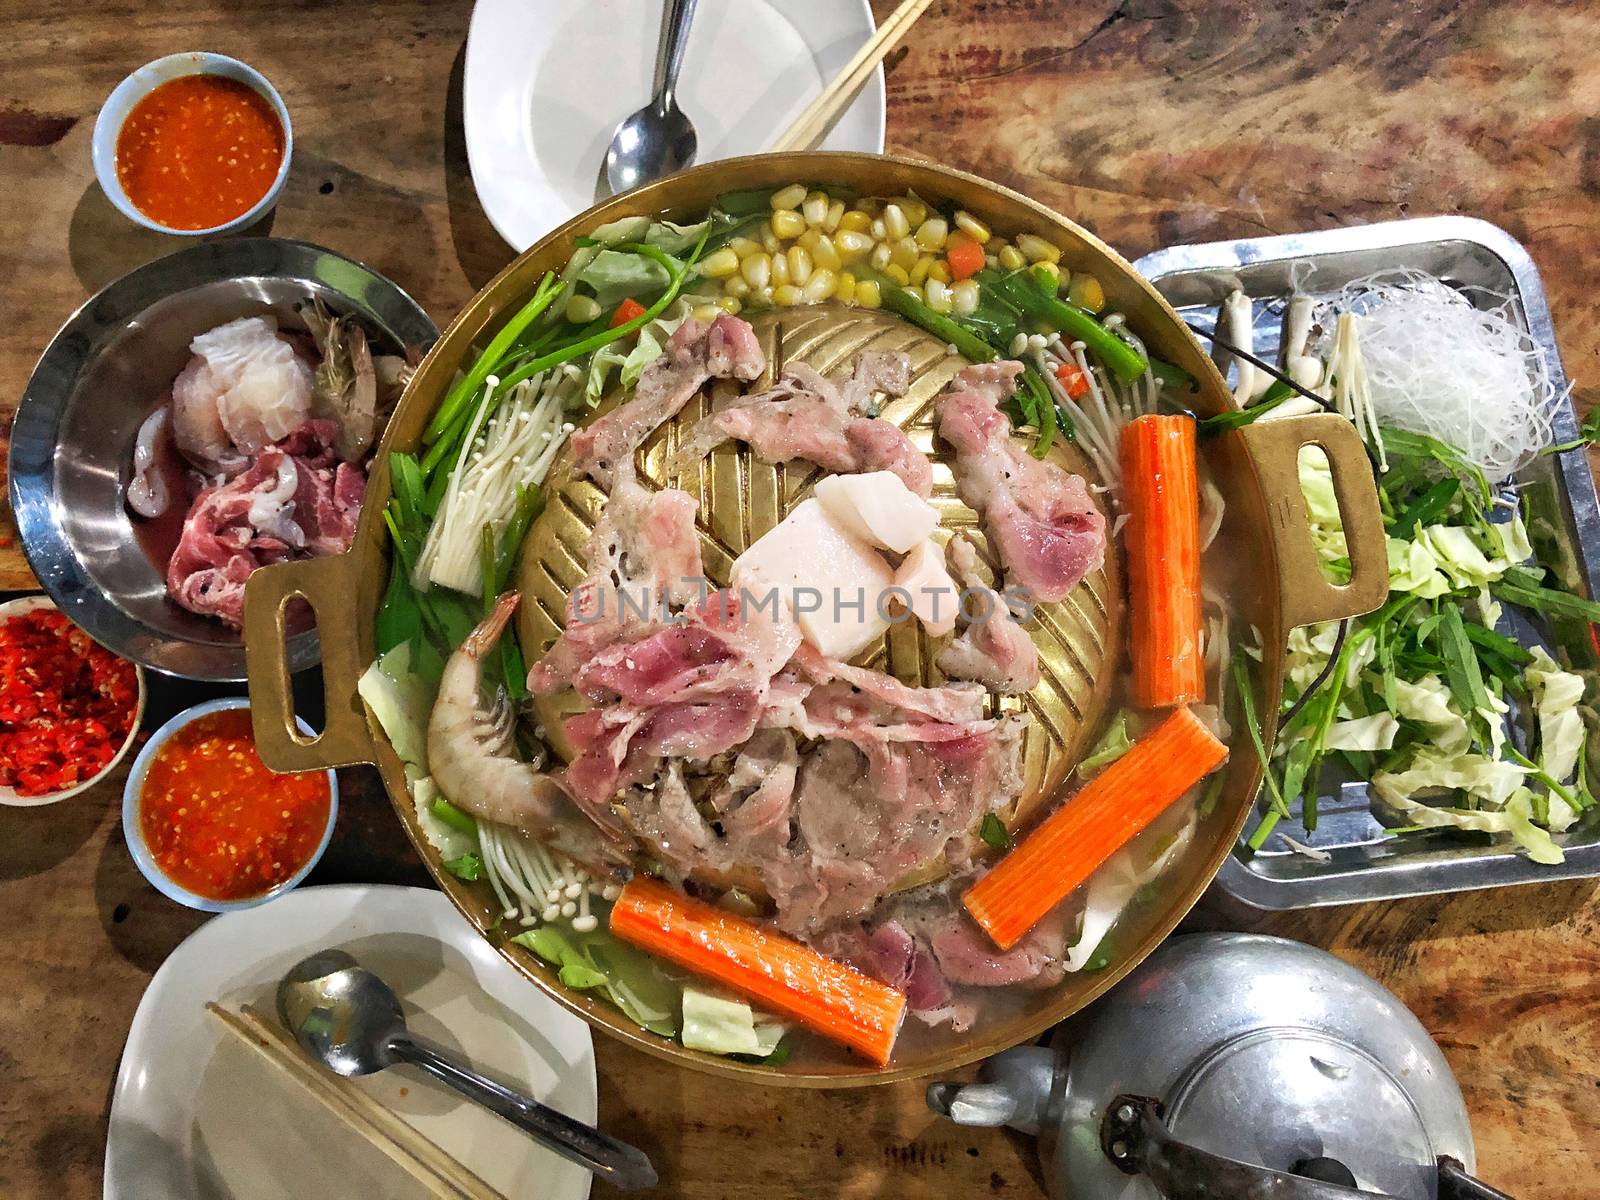 Thai barbecue buffet pork, meat, vegetable by Surasak